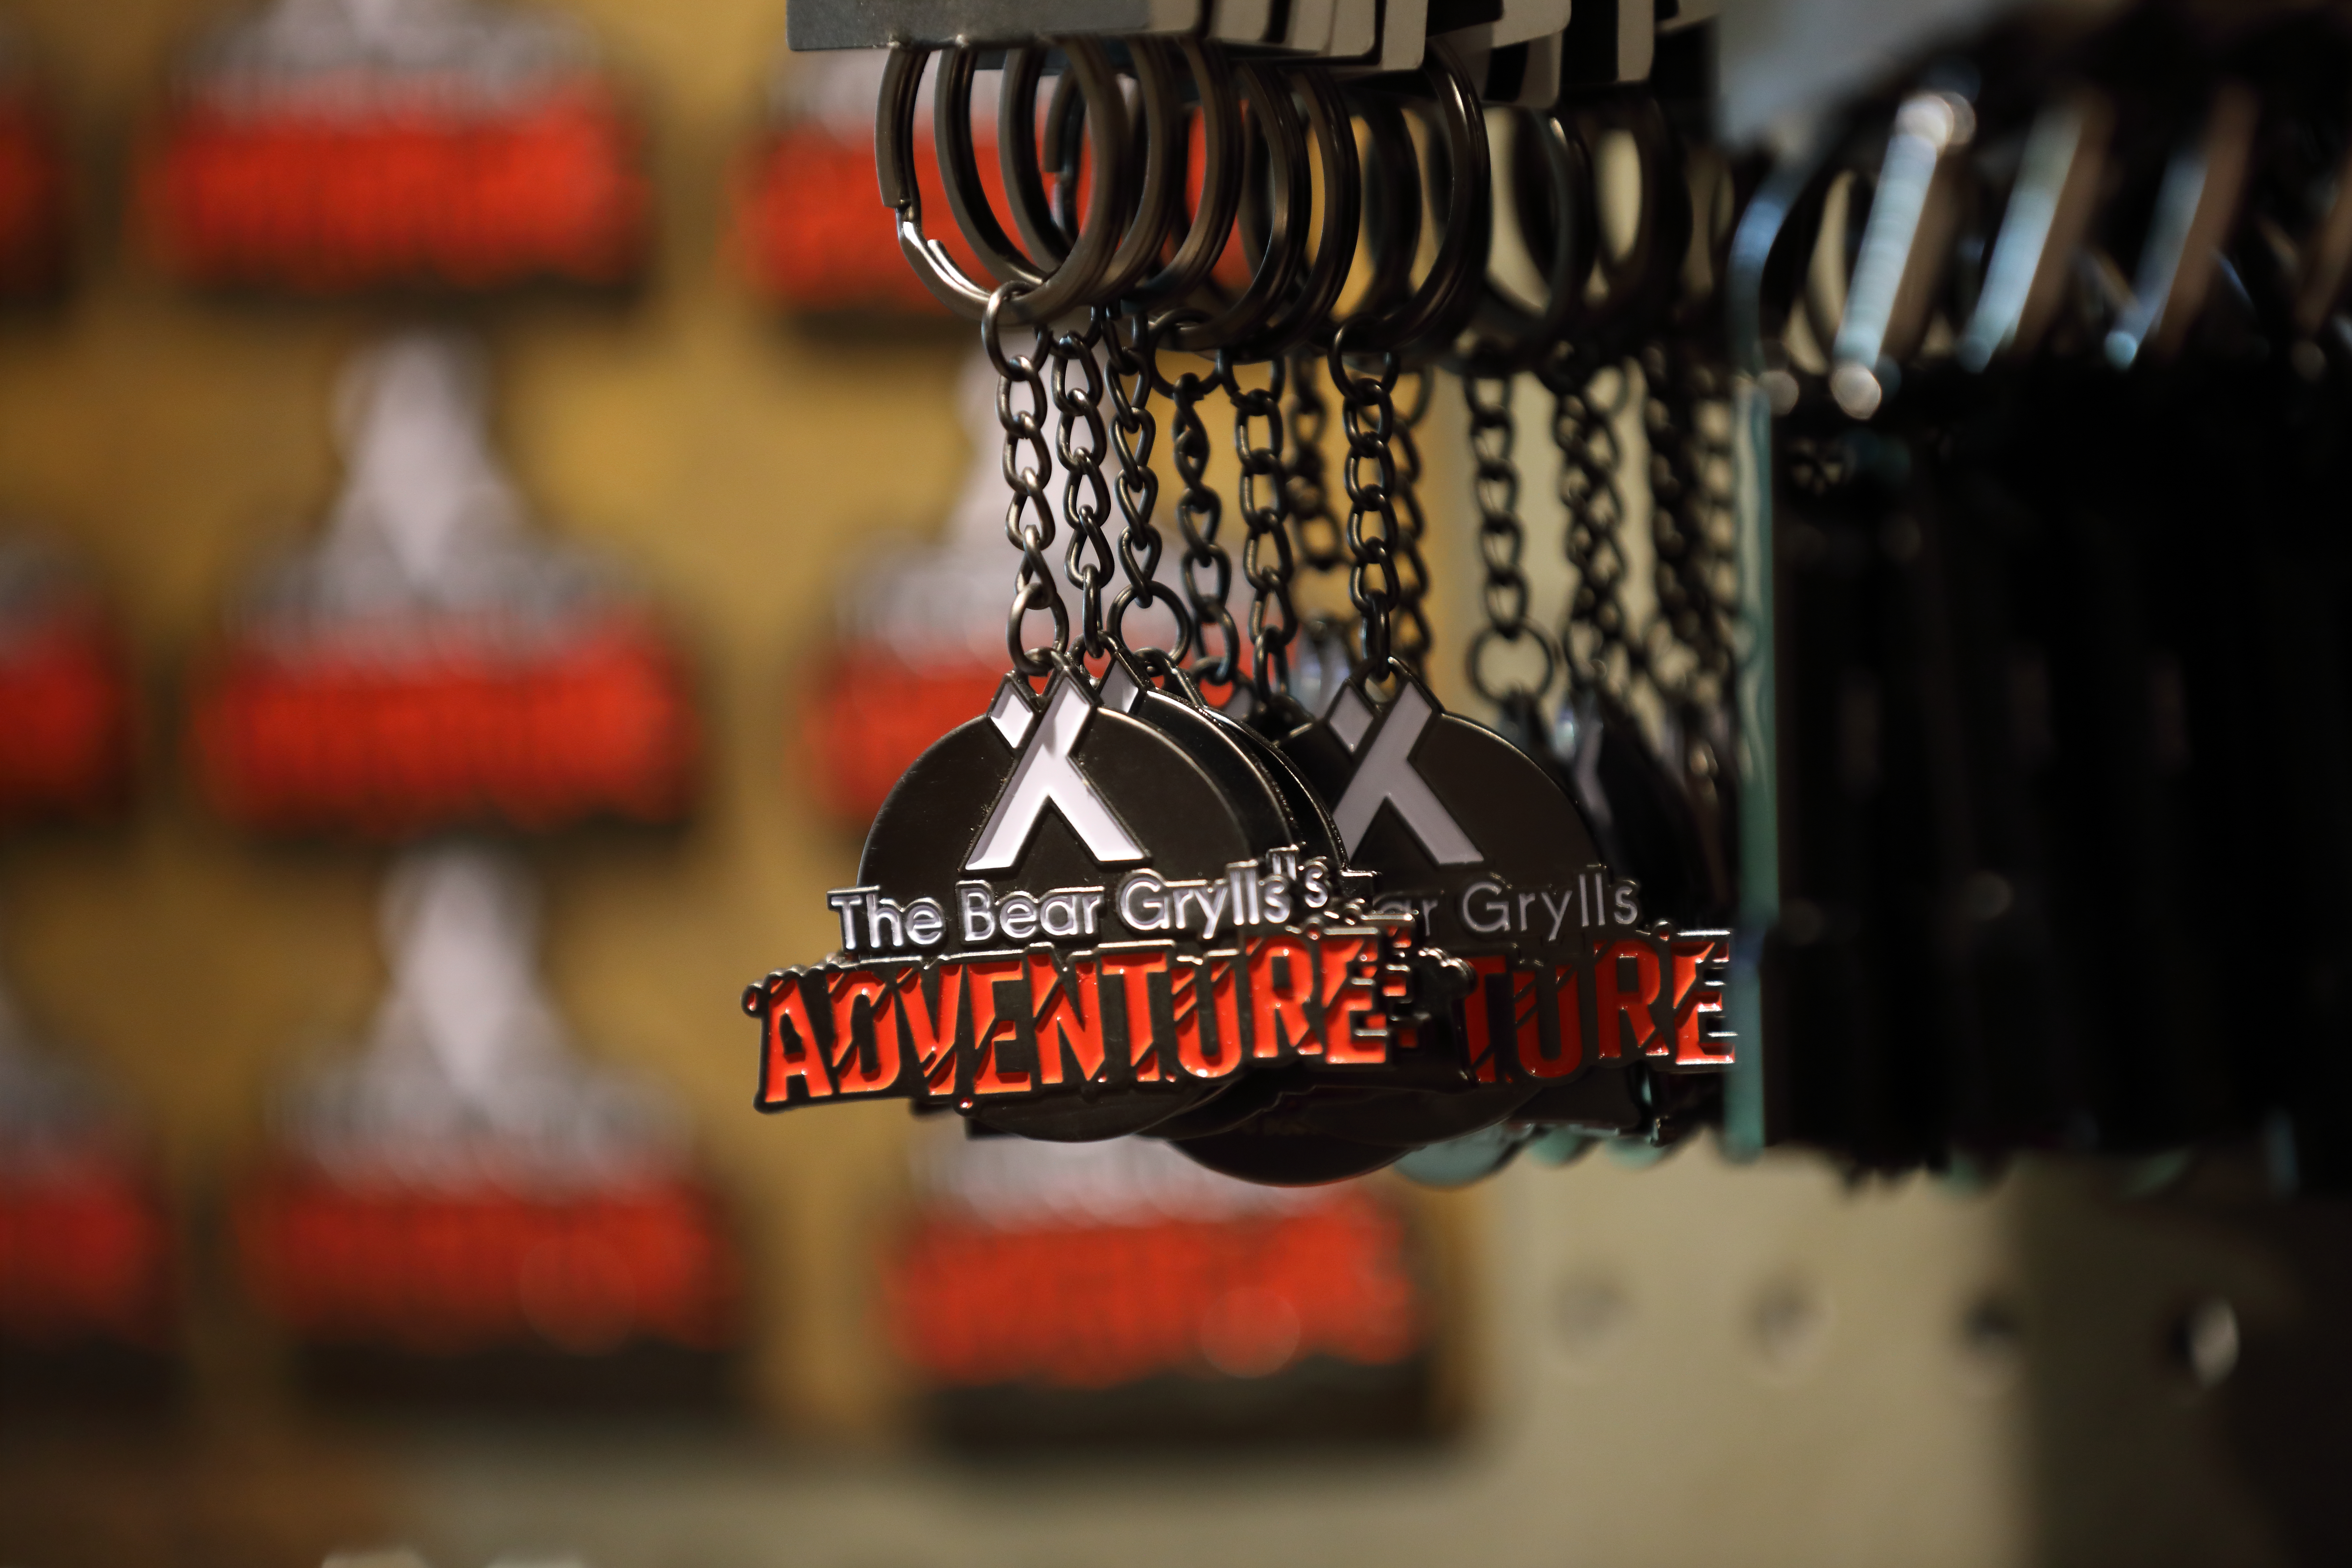 The Bear Grylls Adventure Retail Shop logo key ring